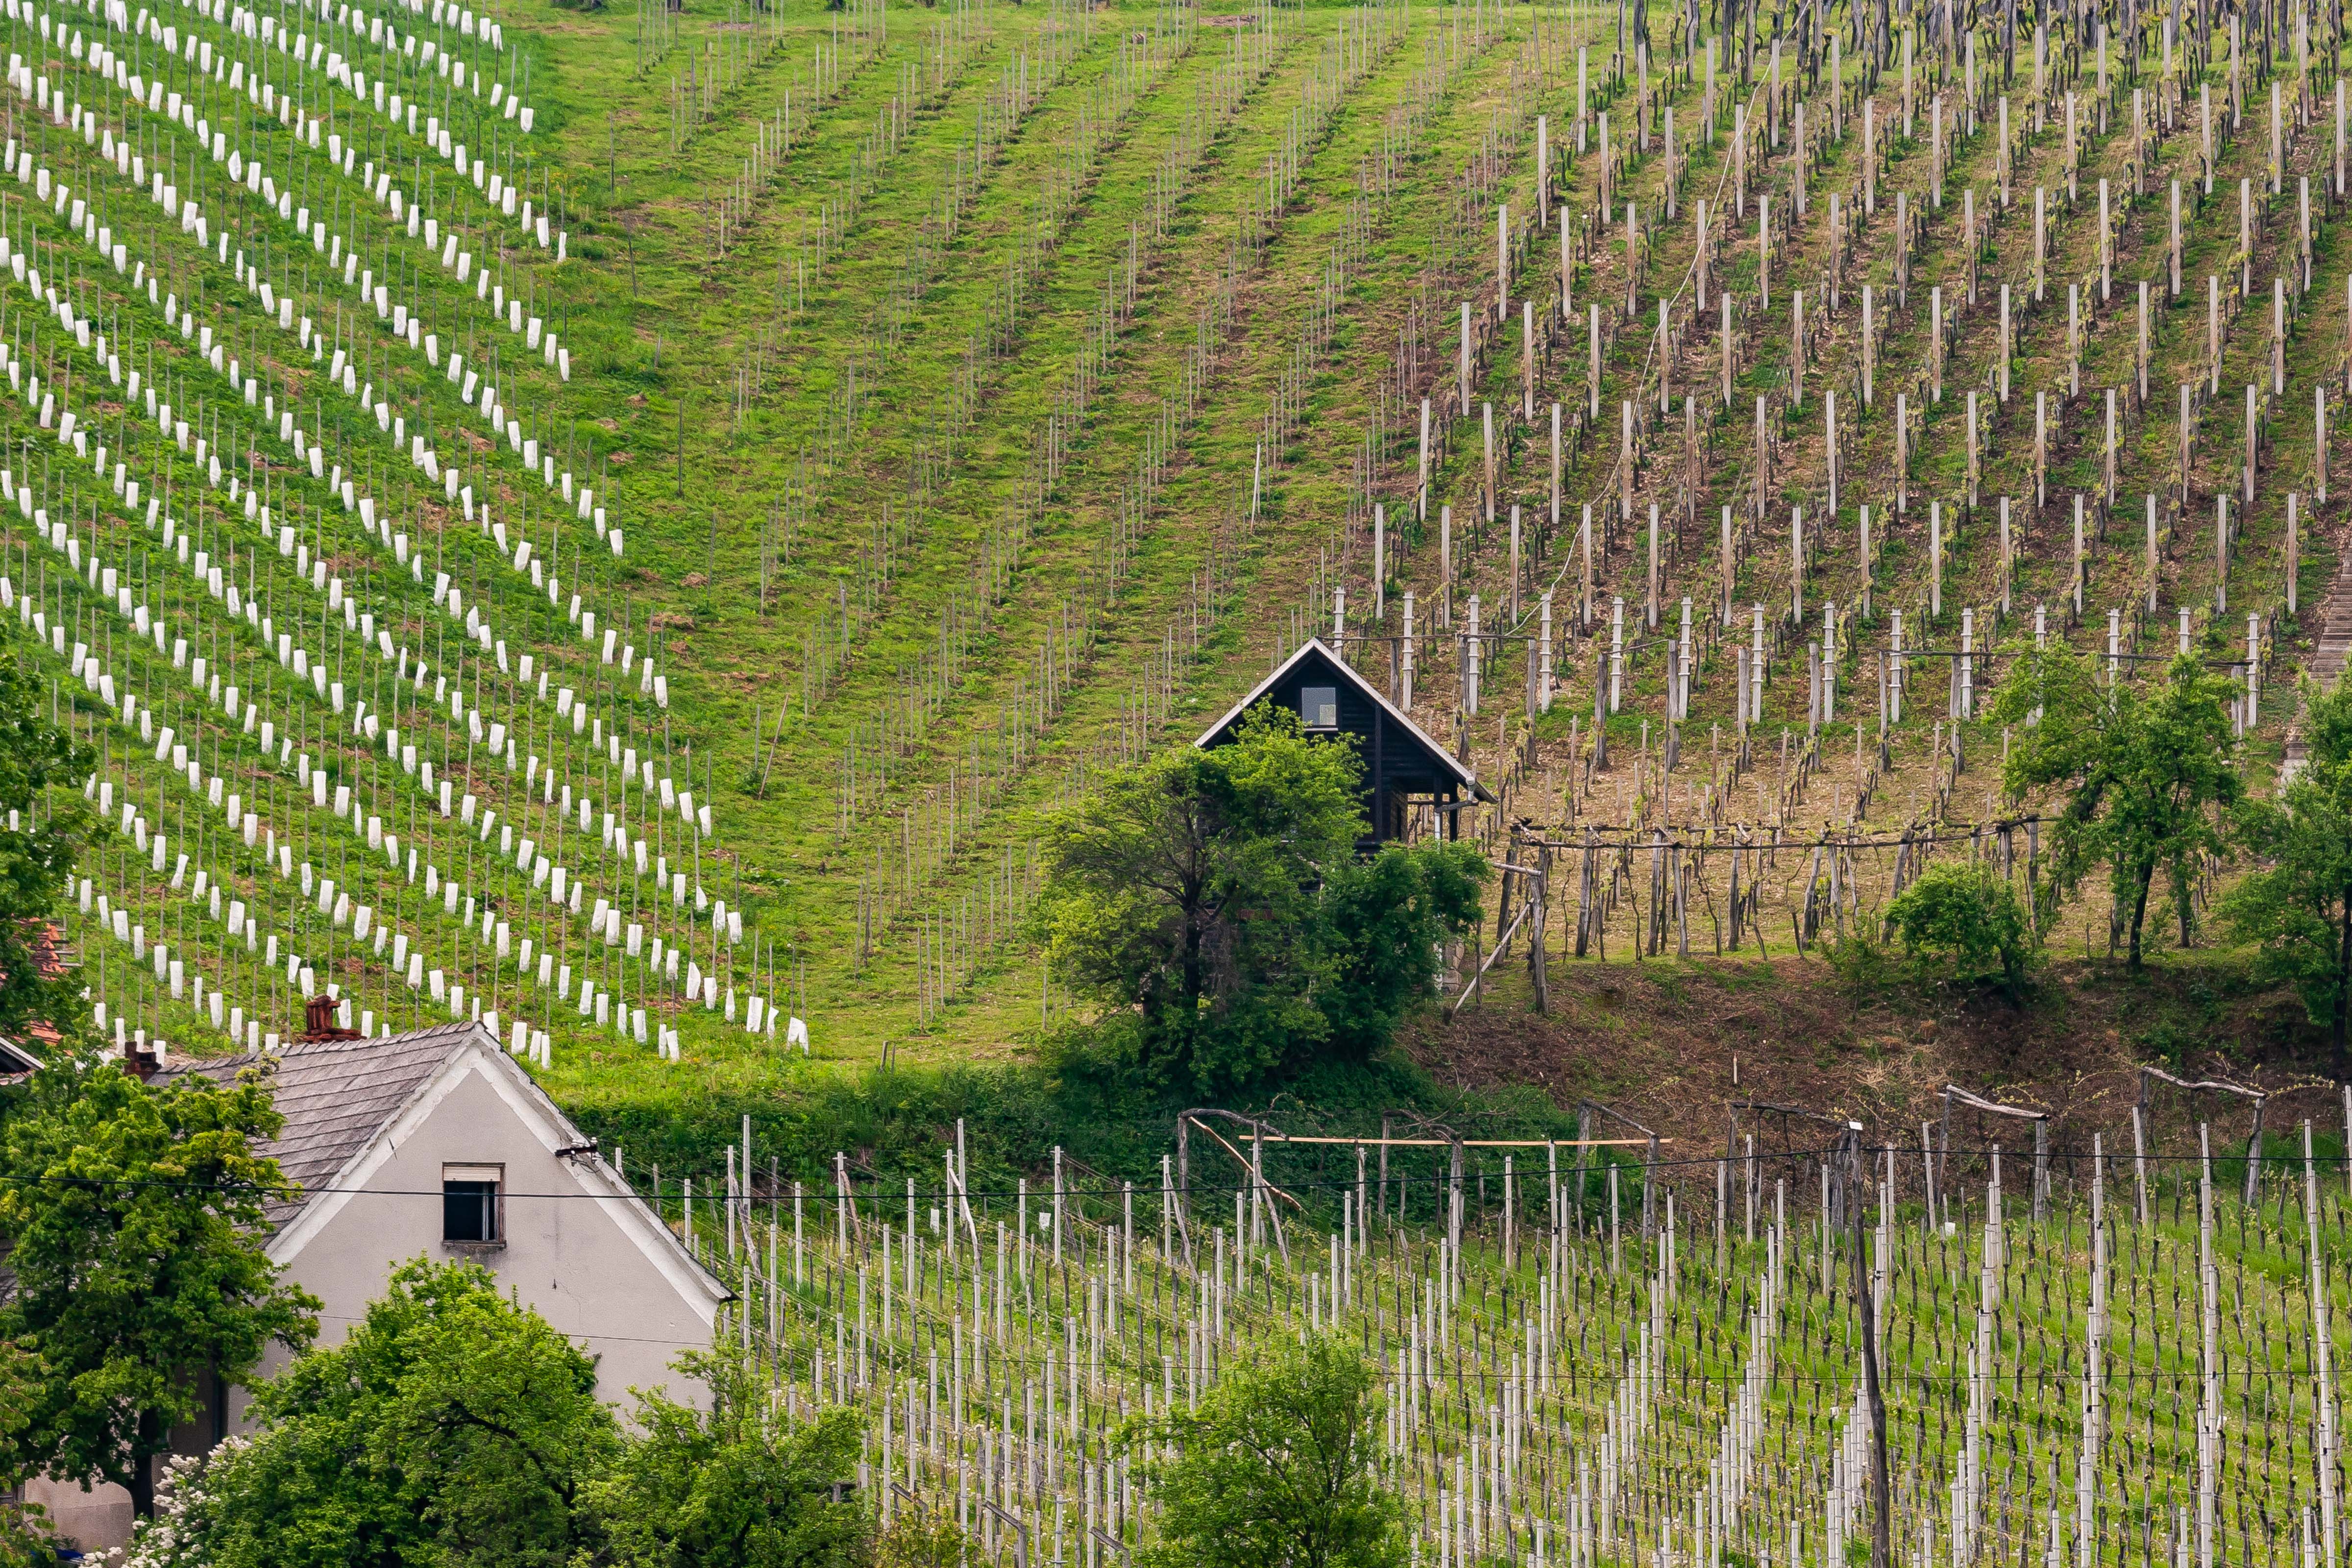 Slovenia, Oplotnica Prov, Vineyards, 2006, IMG 5653